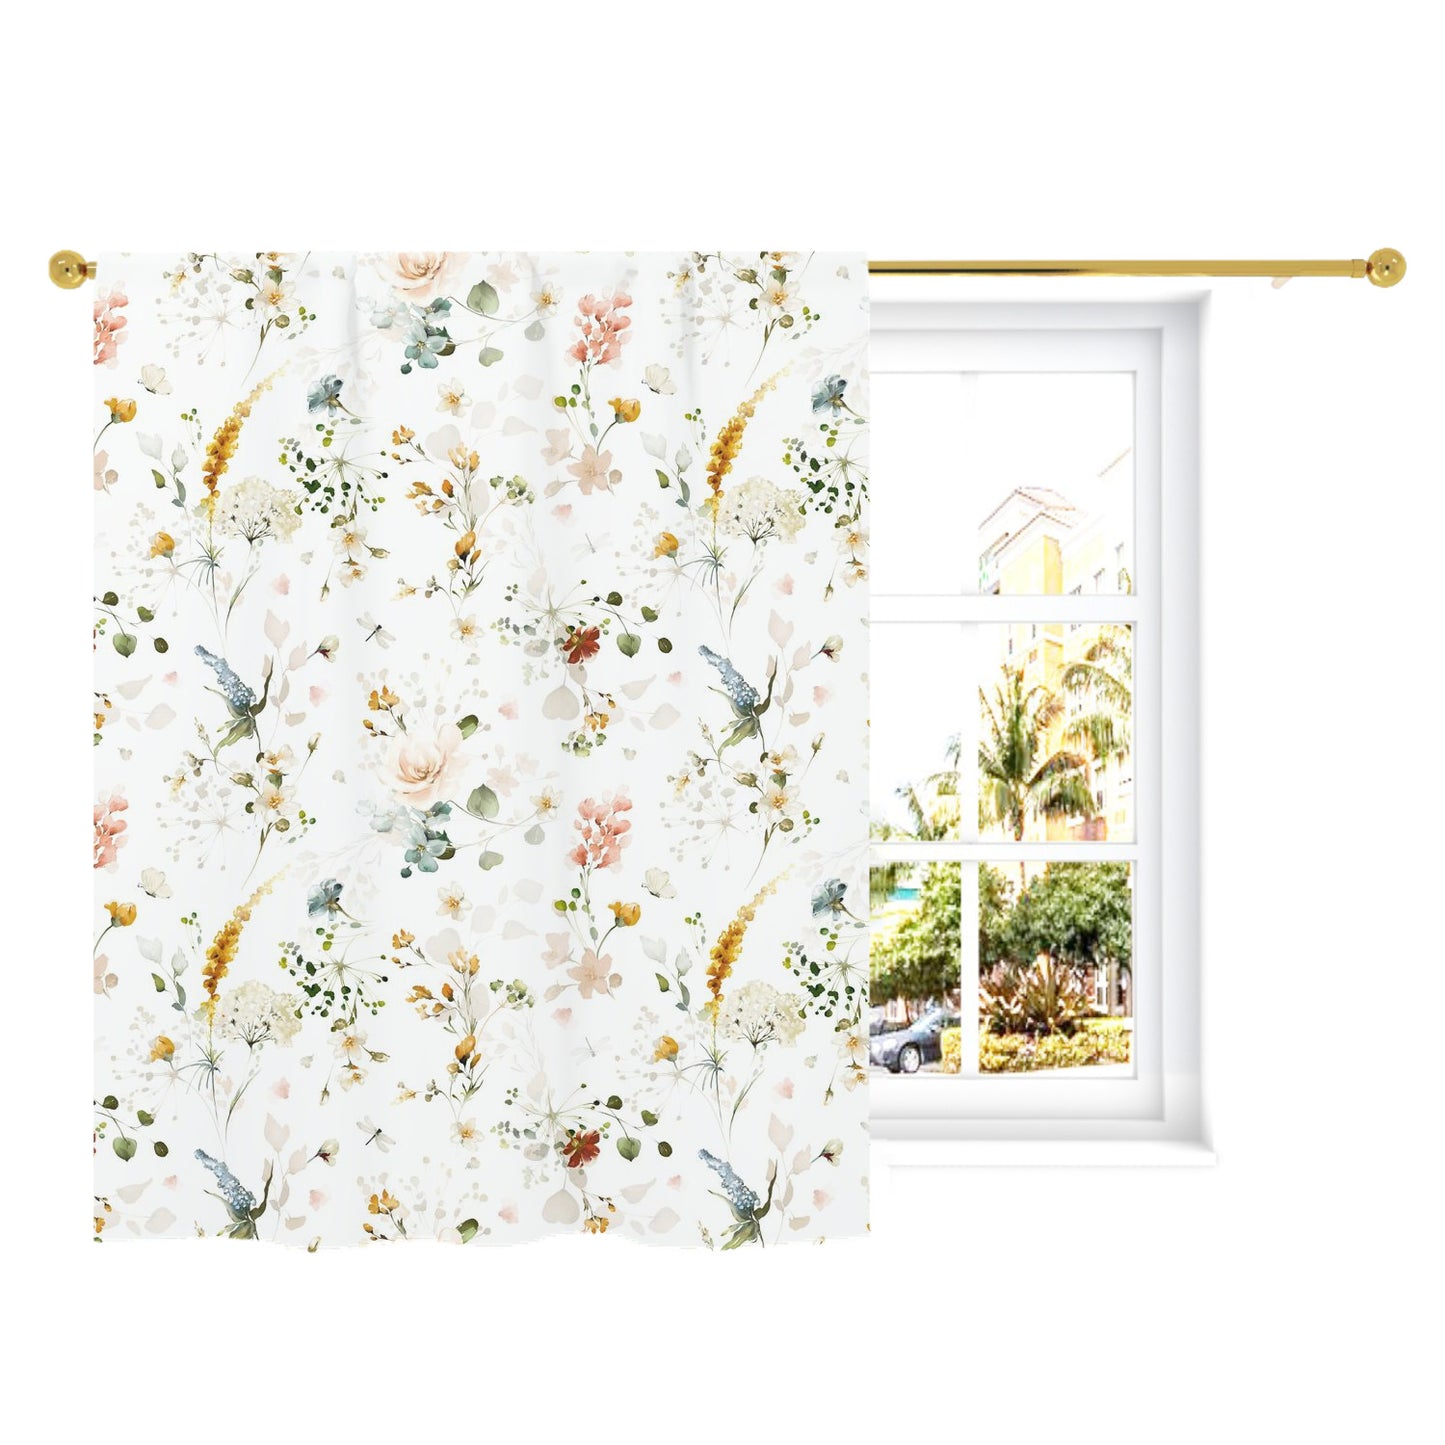 Wild flowers Curtain, Single Panel, Floral Nursery Decor - Vintage Garden